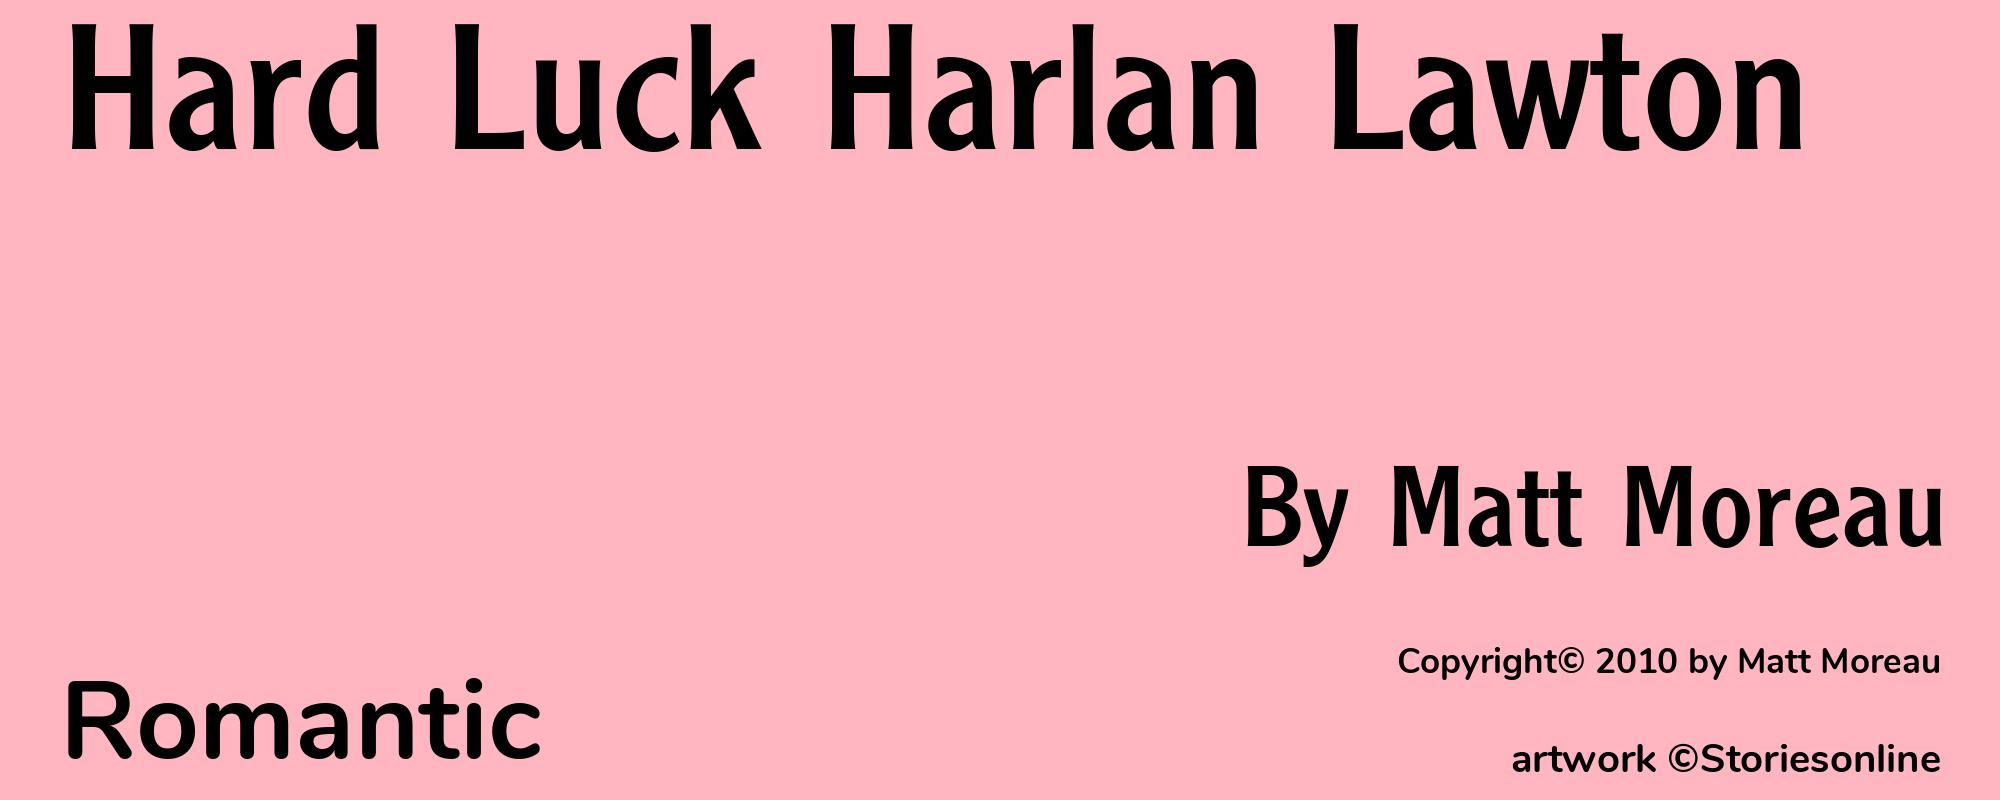 Hard Luck Harlan Lawton - Cover